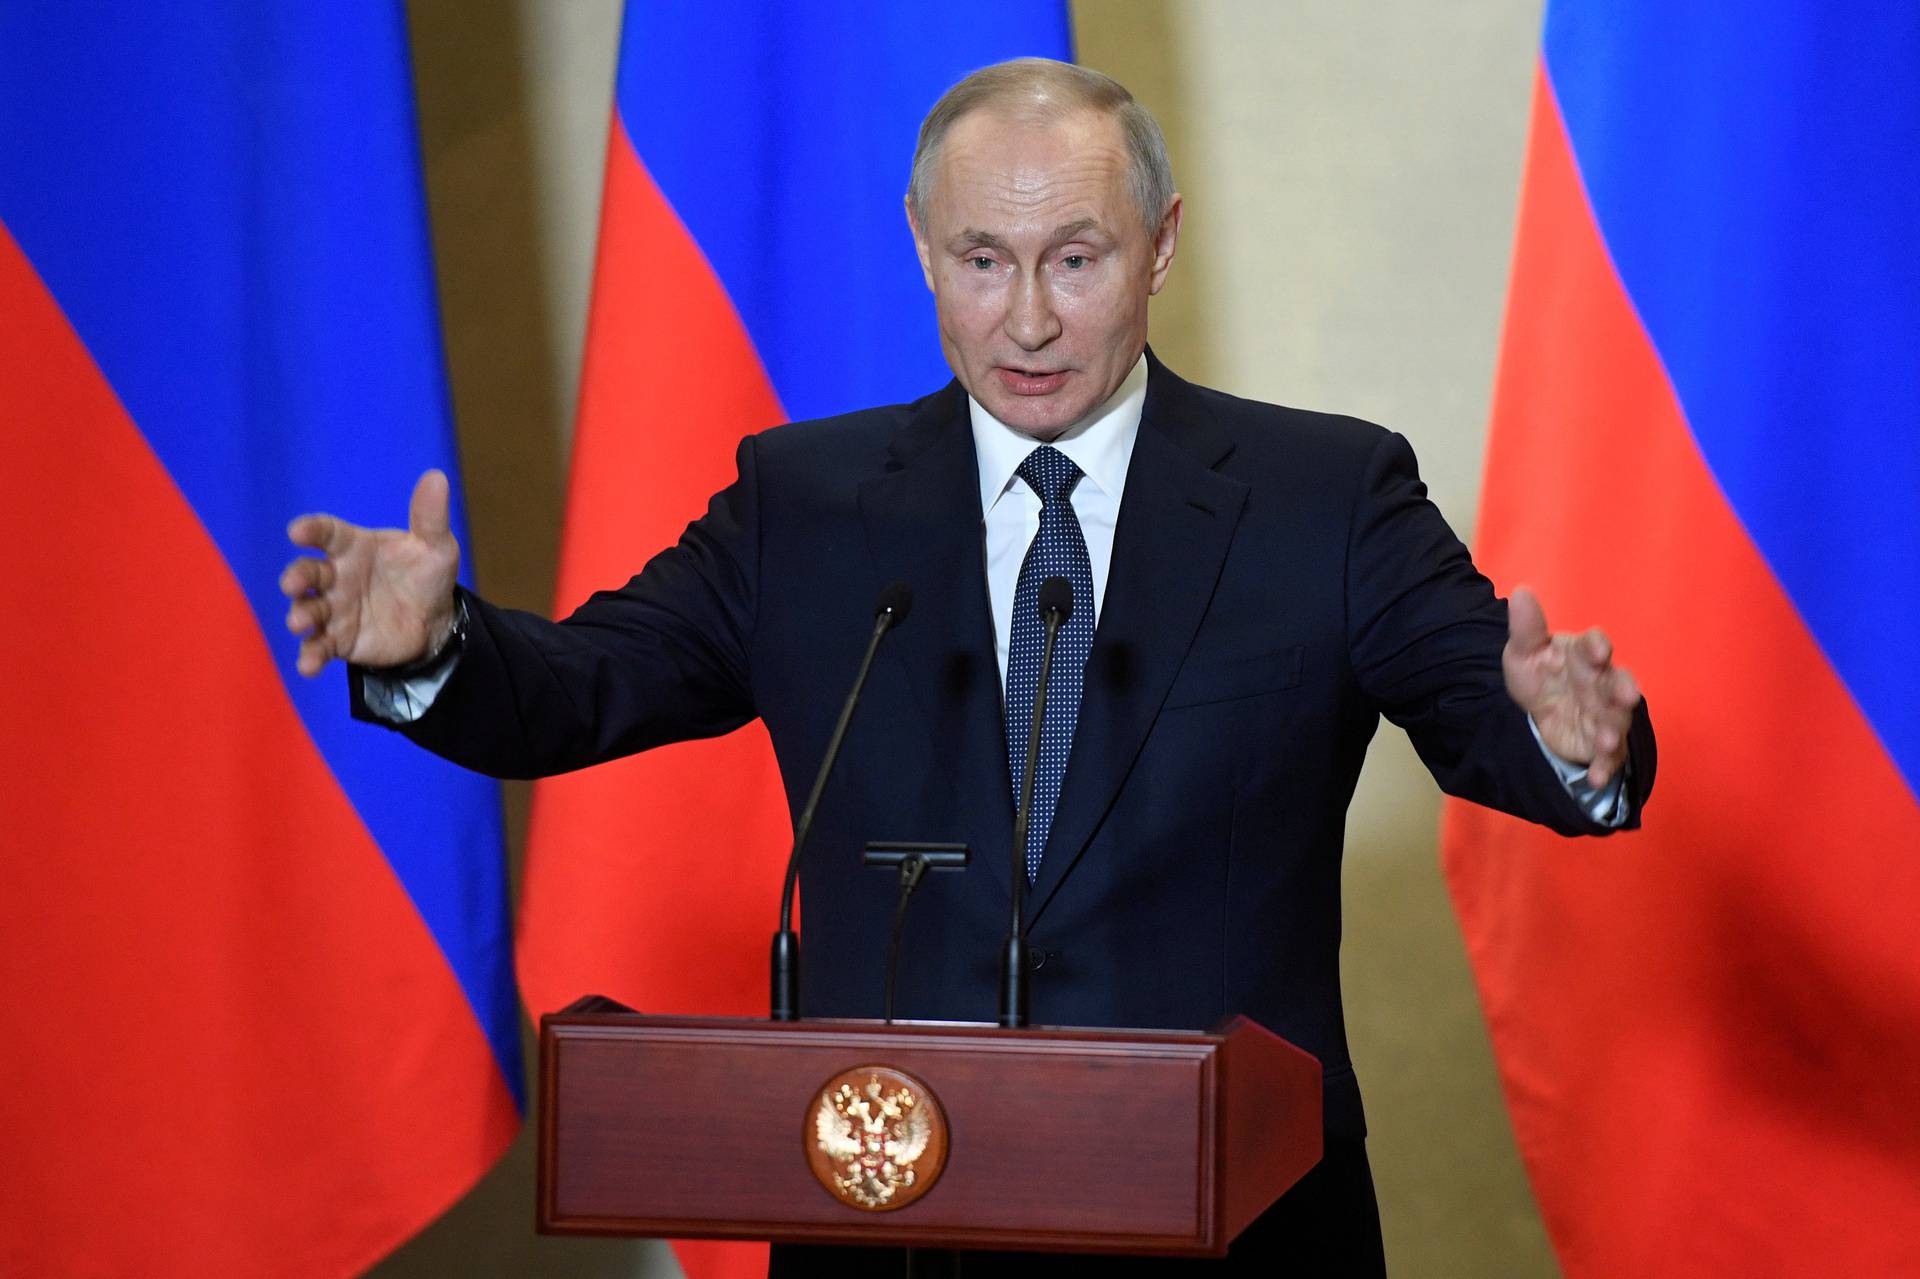 FILE PHOTO: Russian President Vladimir Putin delivers a speech in Sevastopol, Crimea